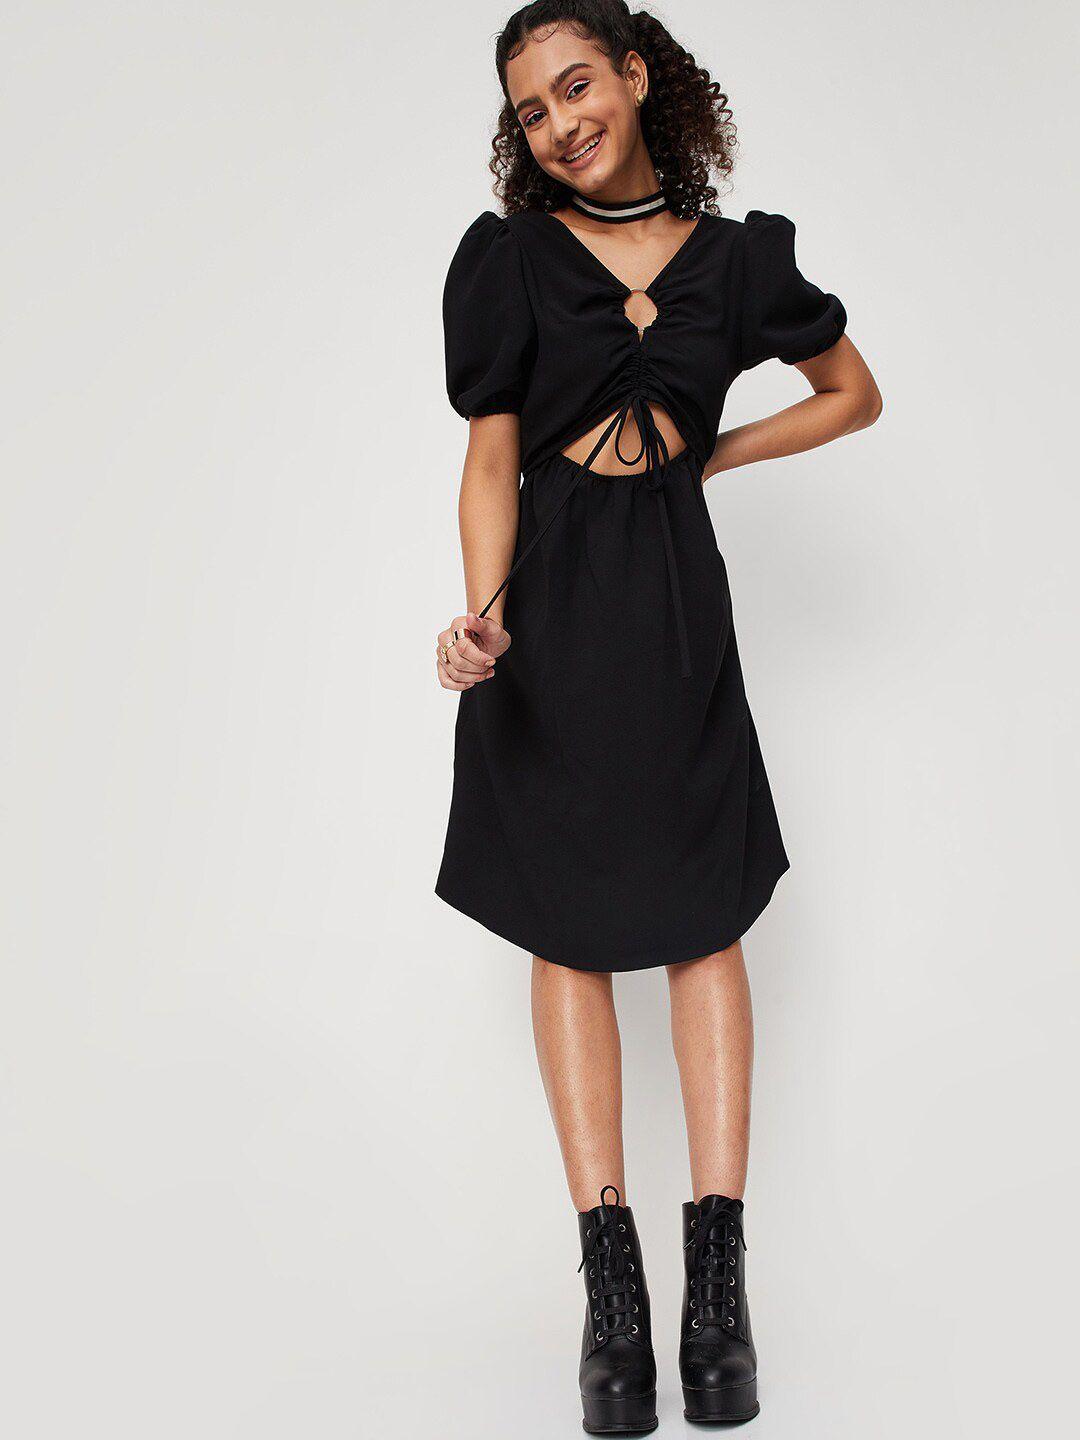 max-black-cut-outs-a-line-dress